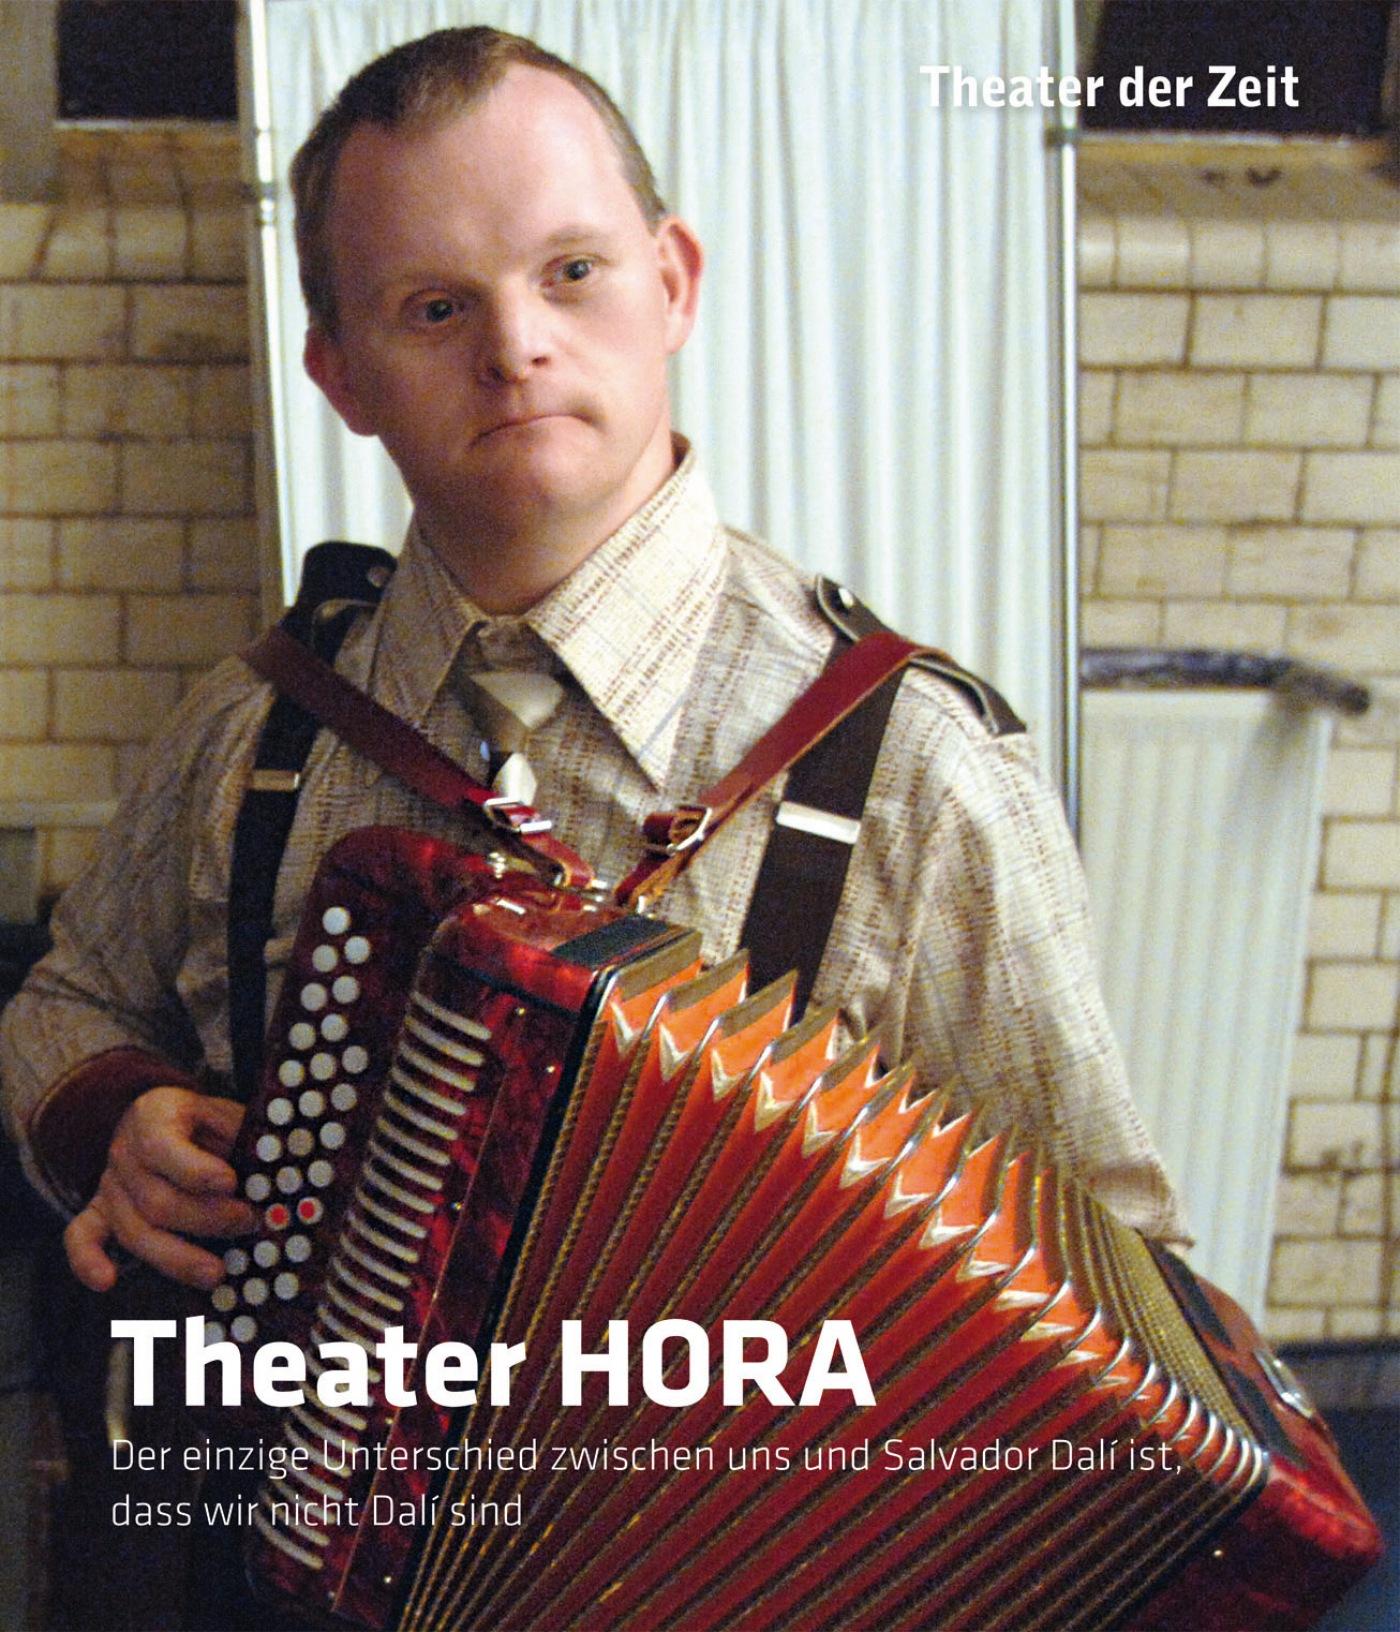 "Theater HORA"